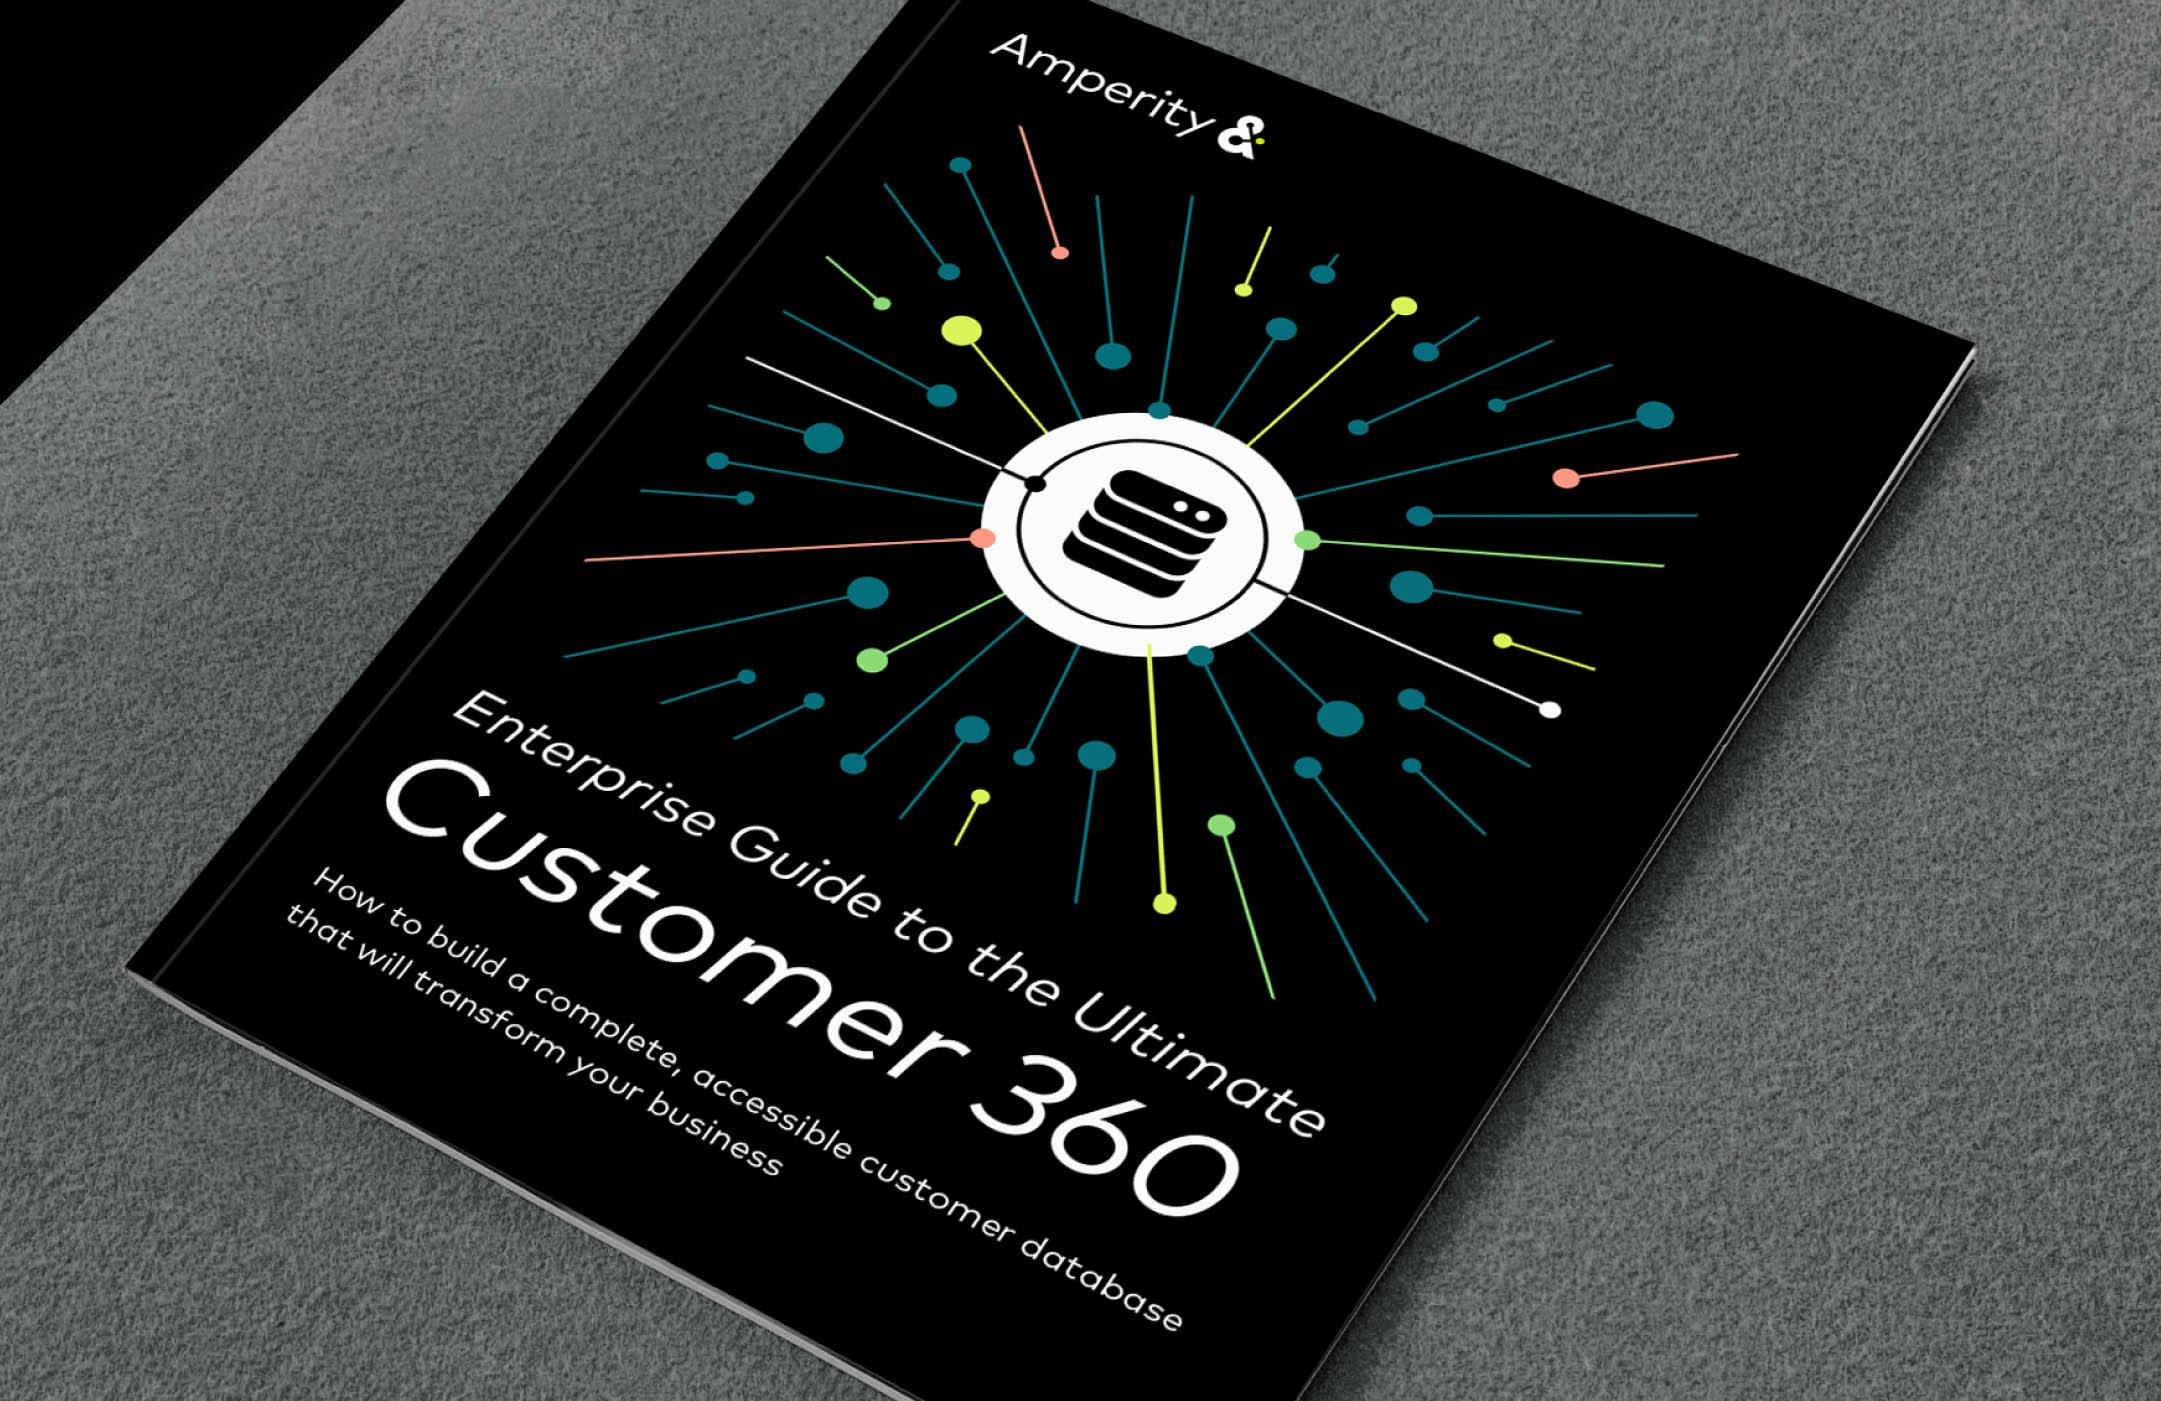 Image of document displaying "Customer 360". 